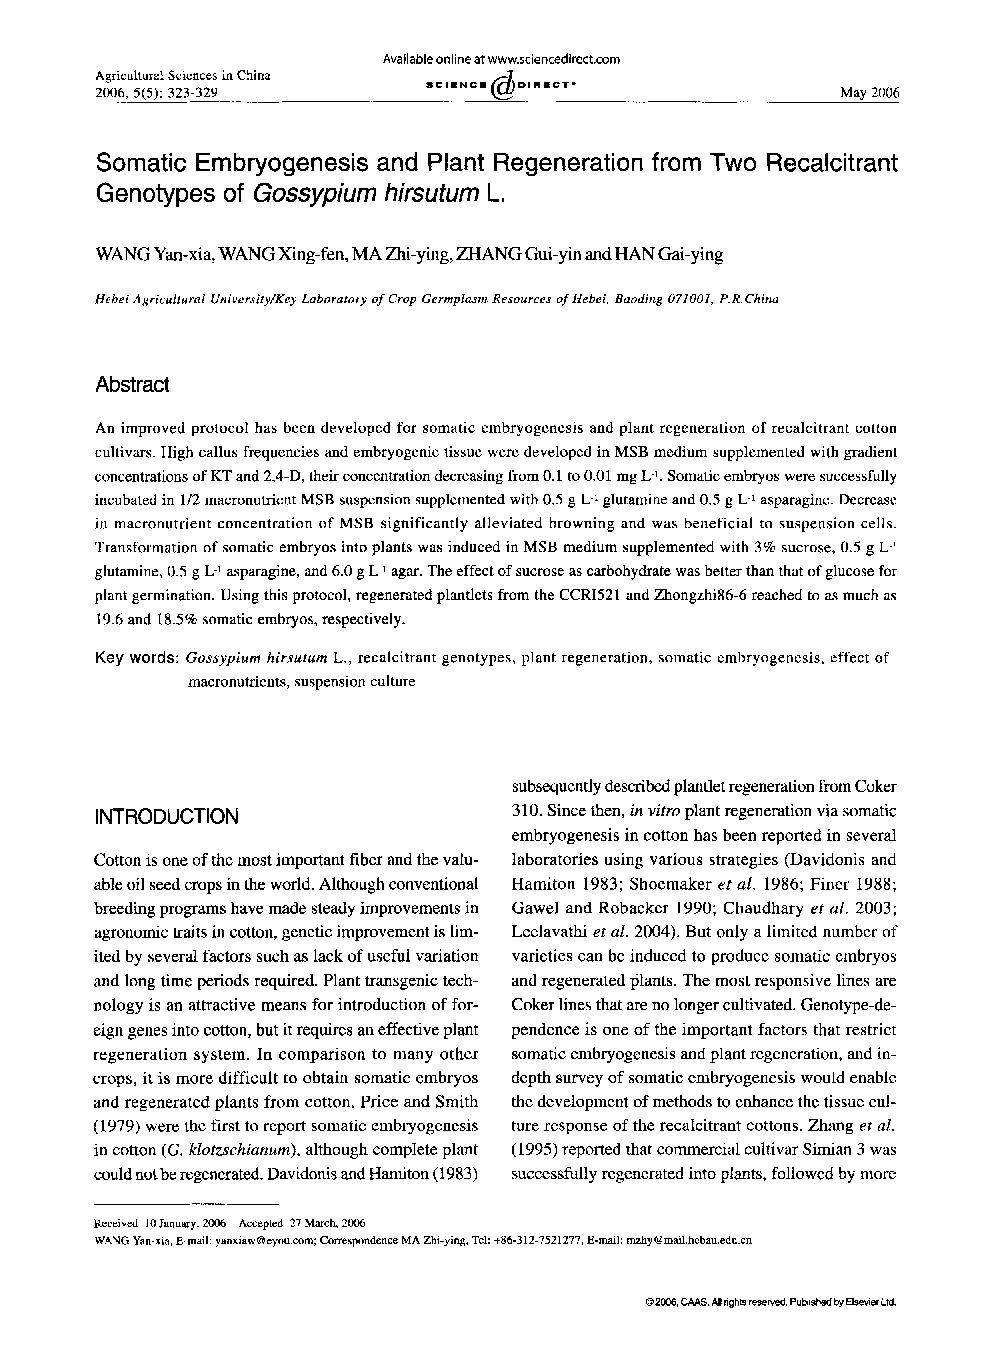 Somatic Embryogenesis and Plant Regeneration from Two Recalcitrant Genotypes of Gossypium hirsutum L.